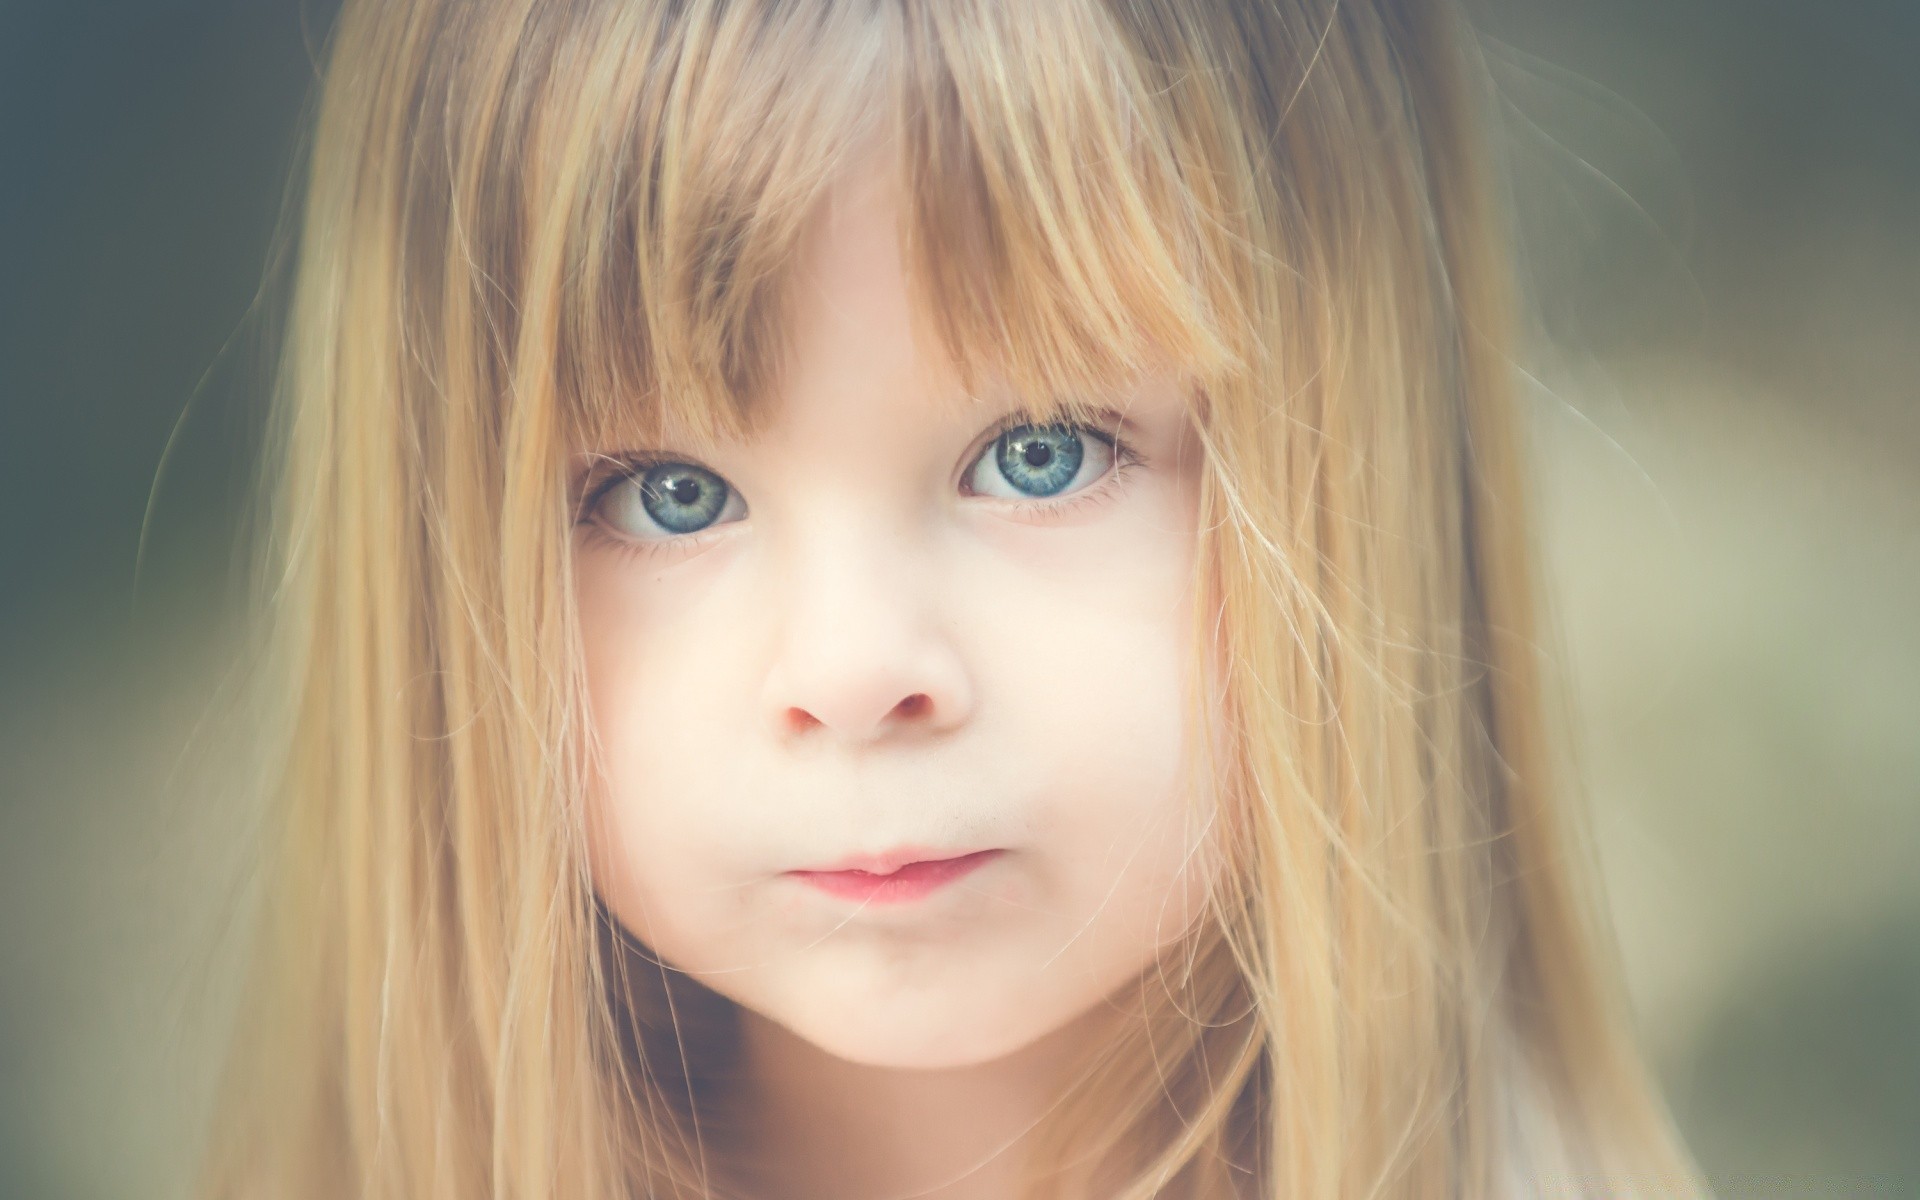 children cute eye fashion portrait pretty woman child girl hair skin glamour lips